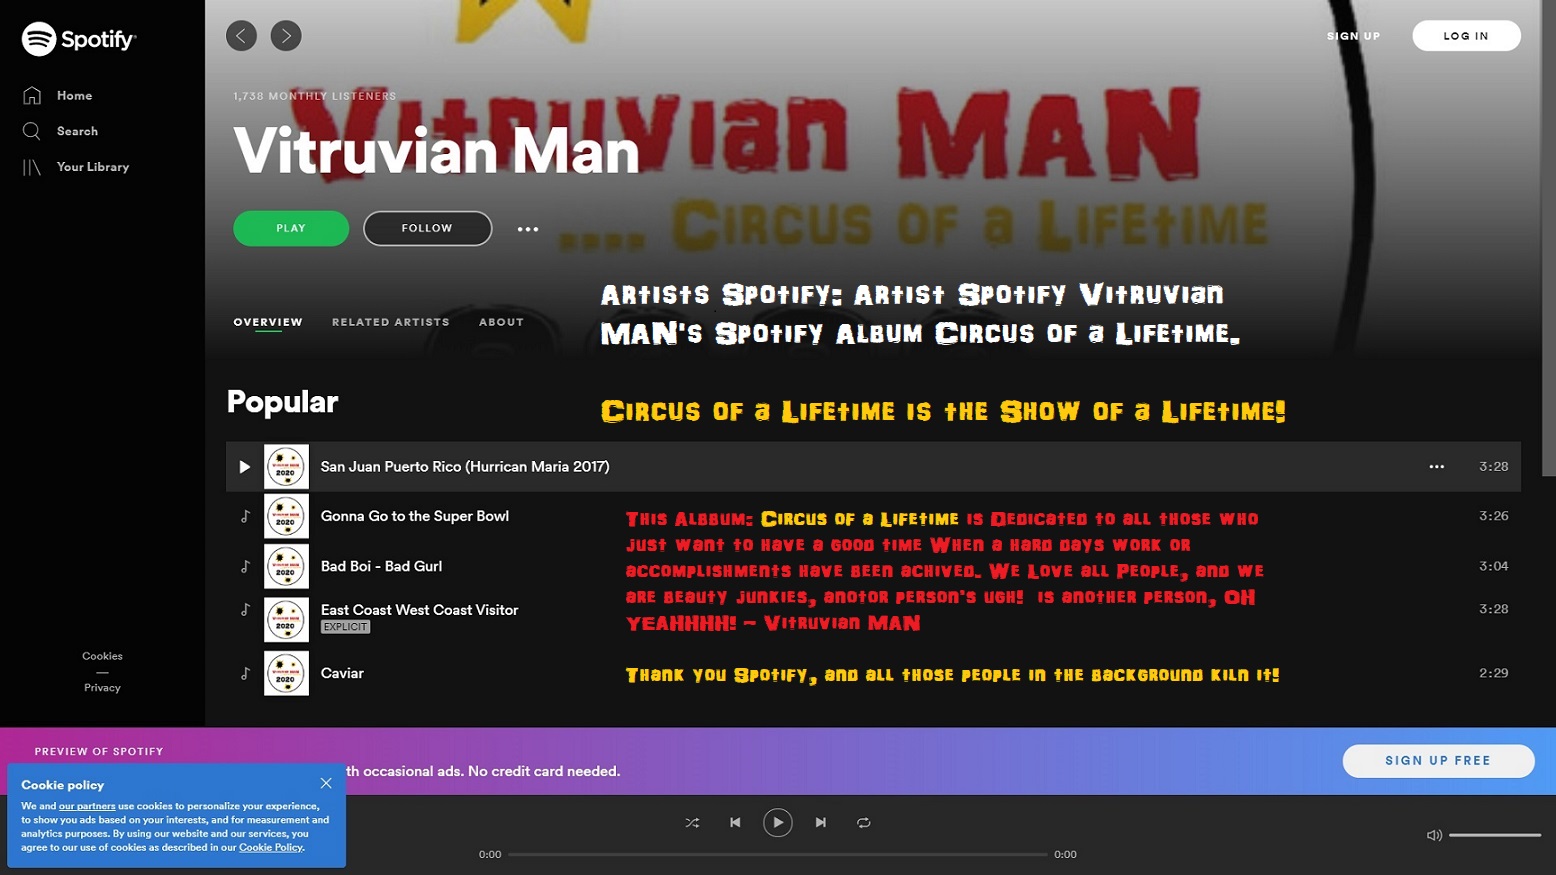 r339-artists-spotify-artist-spotify-vitruvian-man-spotify-album-circus-of-a-lifetime.jpg